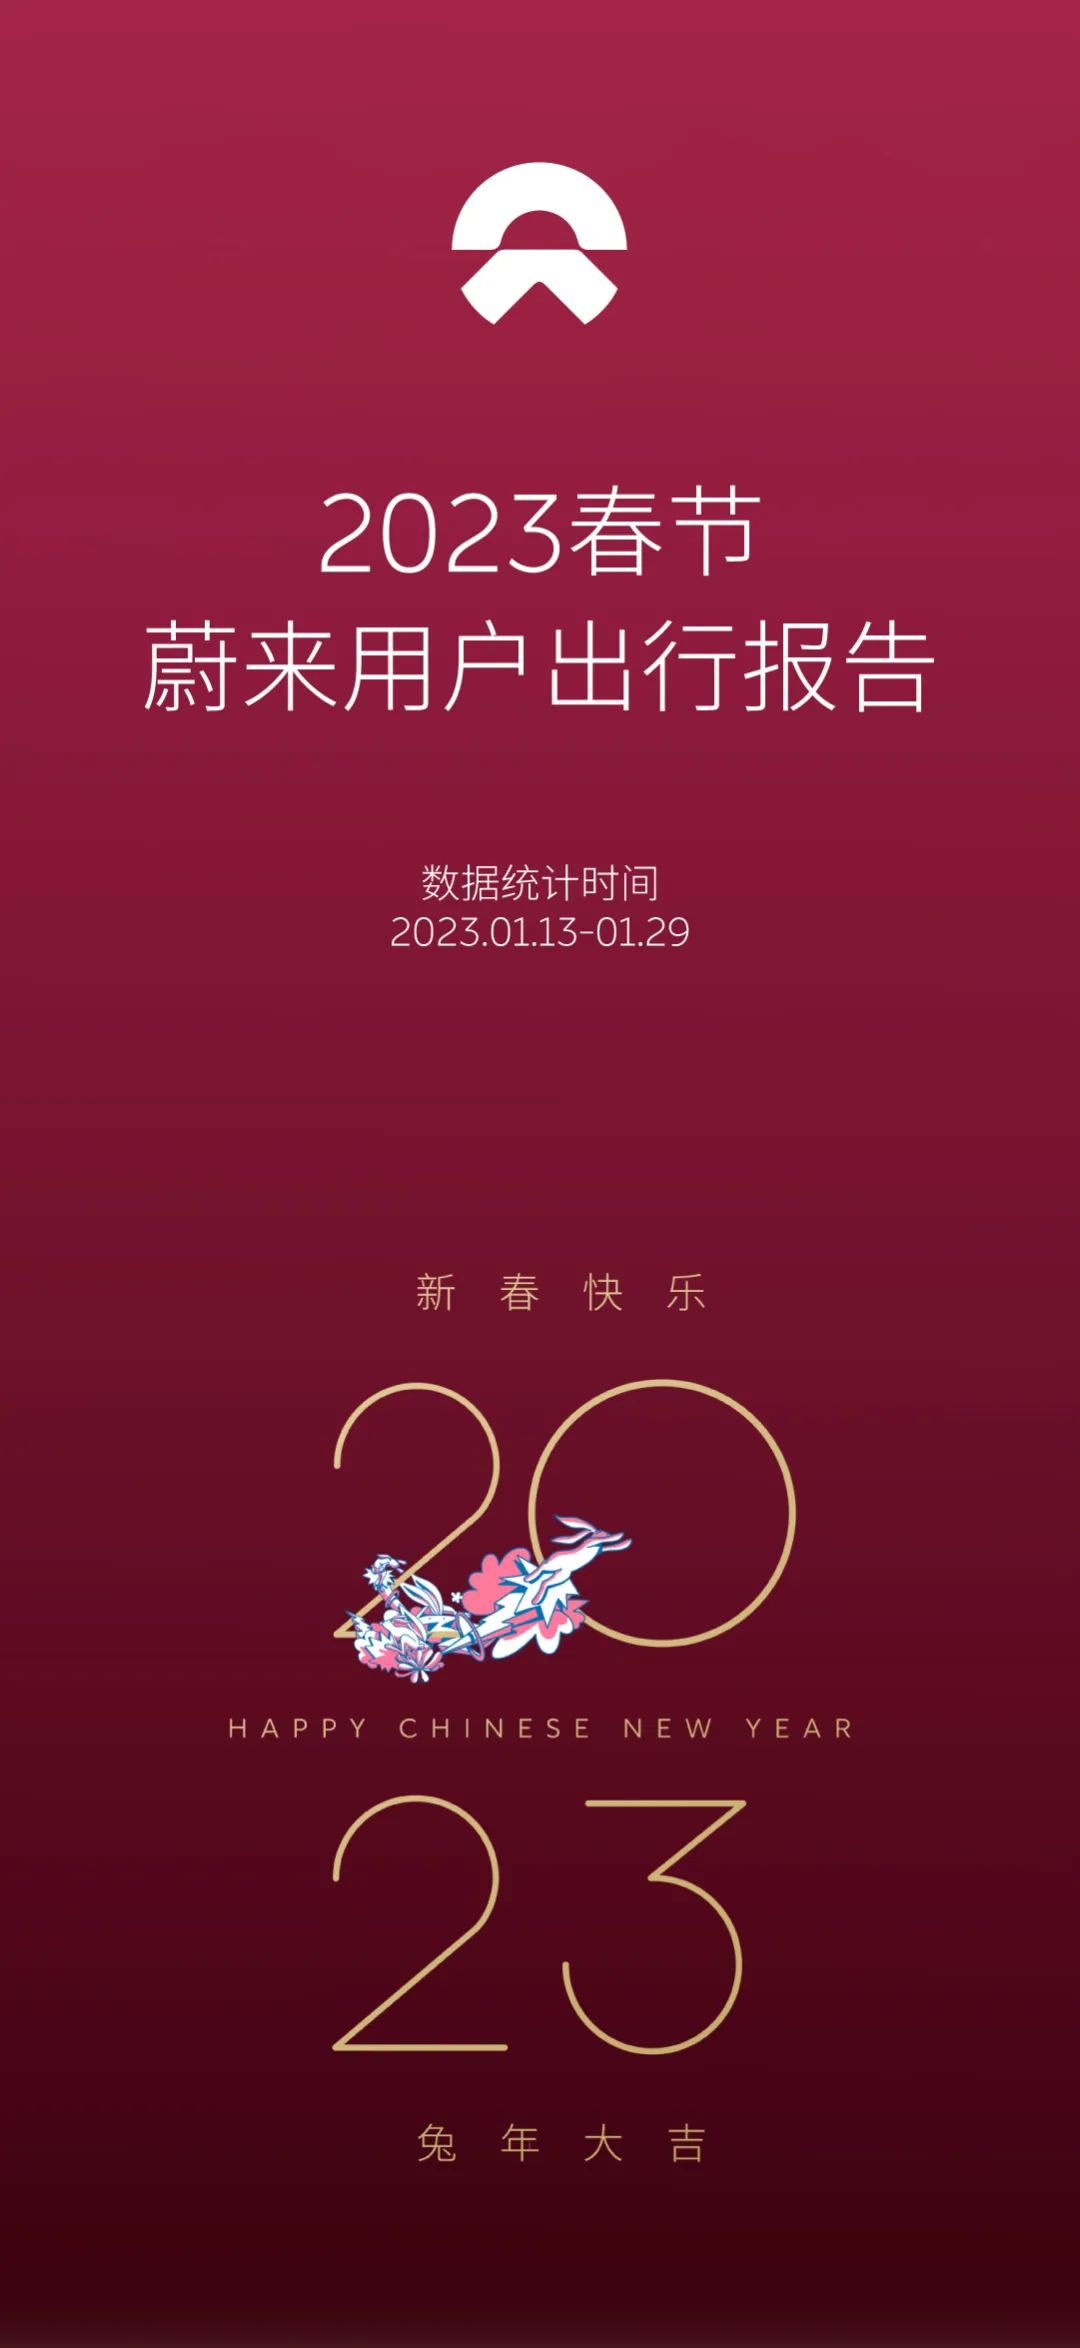 NIO released 2023 Spring Festival NIO User Travel Report